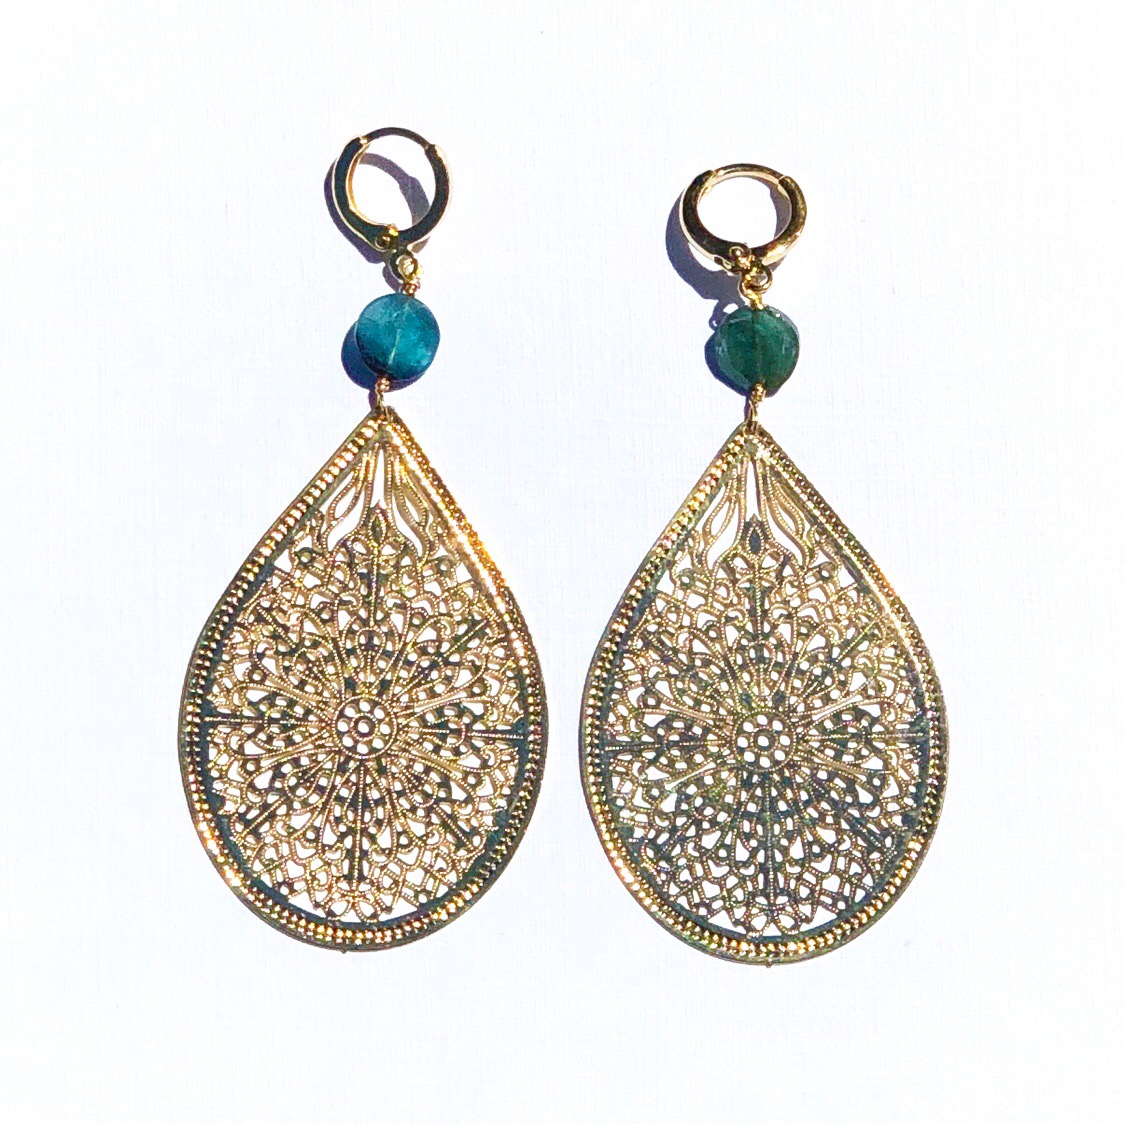 Goldfilled Tourmaline earrings - Indy&Noa